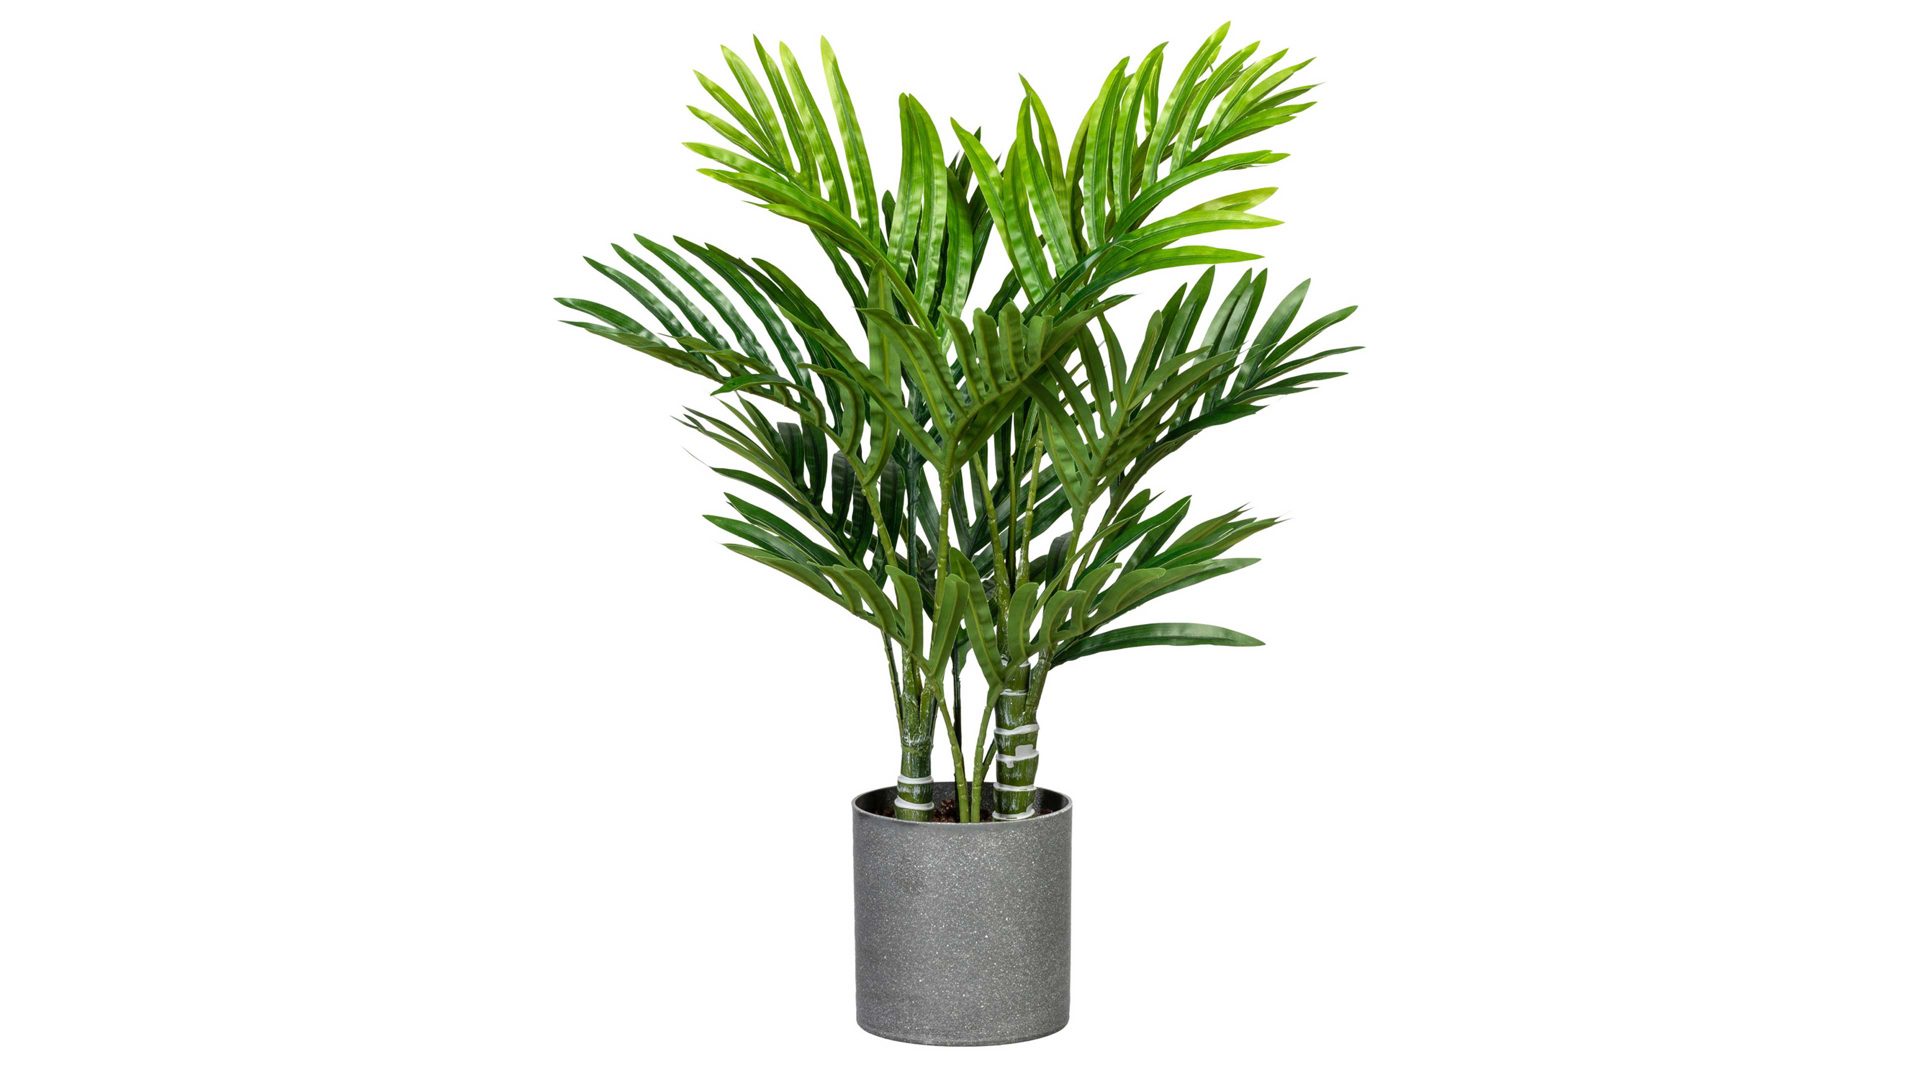 Pflanze Gasper aus Kunststoff in Grün Mini-Kentiaplame grüner Kunststoff & grauer Melamintopf – Höhe ca. 55 cm